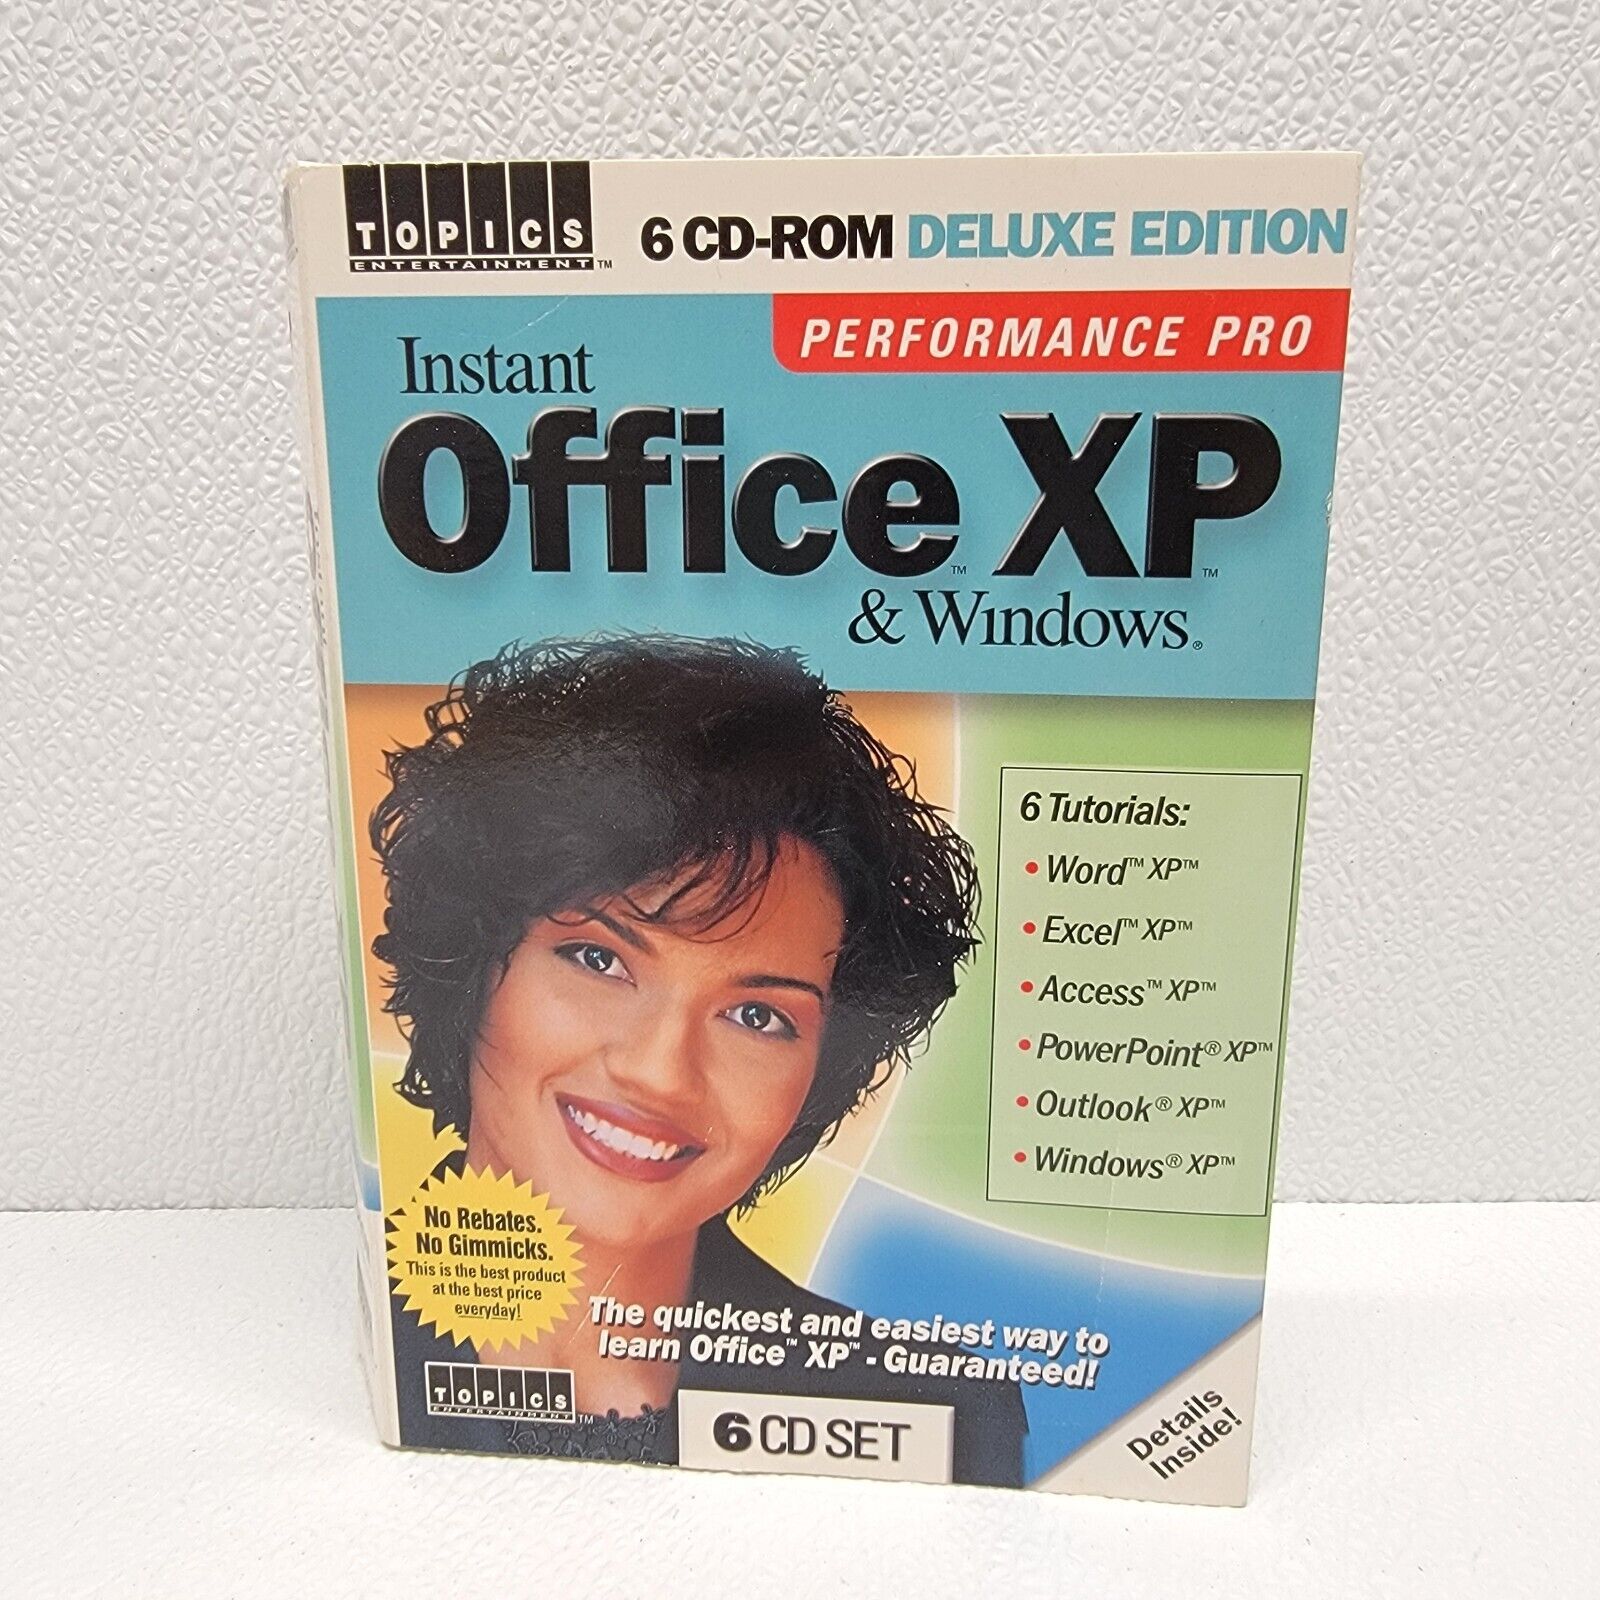 2002 Performance Pro Instant Office XP & Windows 6 CD Set - New Sealed